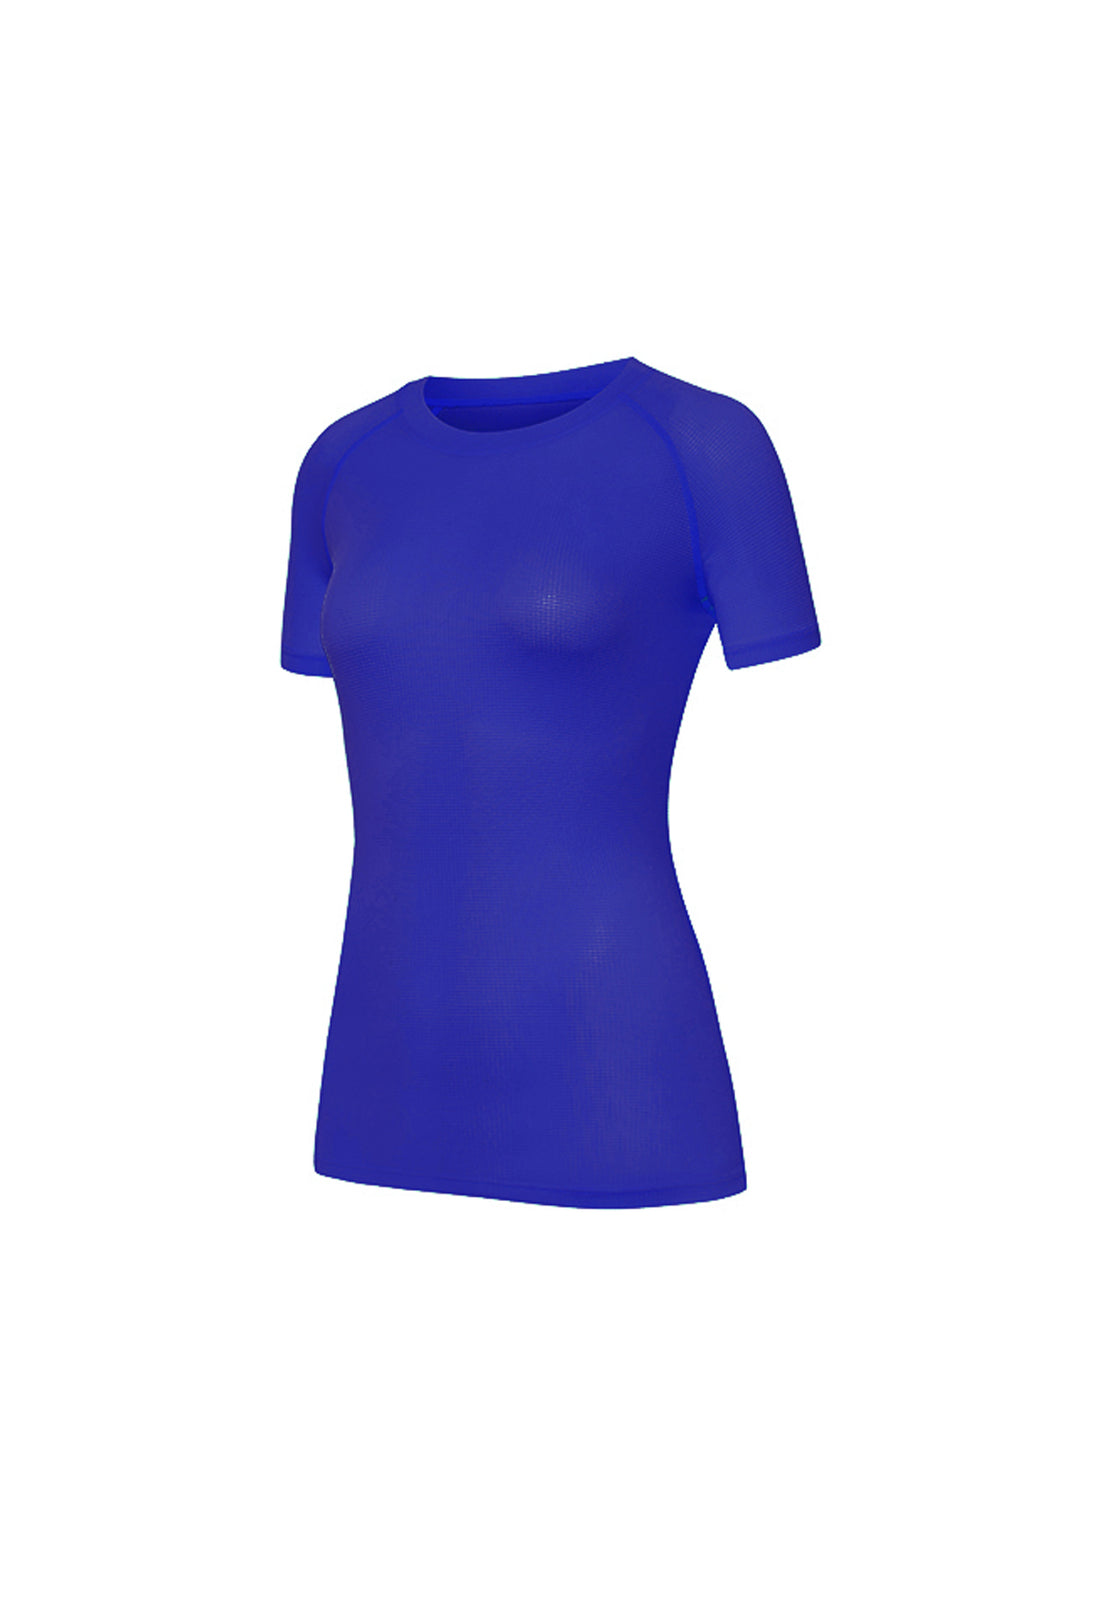 Air Scent T Shirt - Vivid Blue